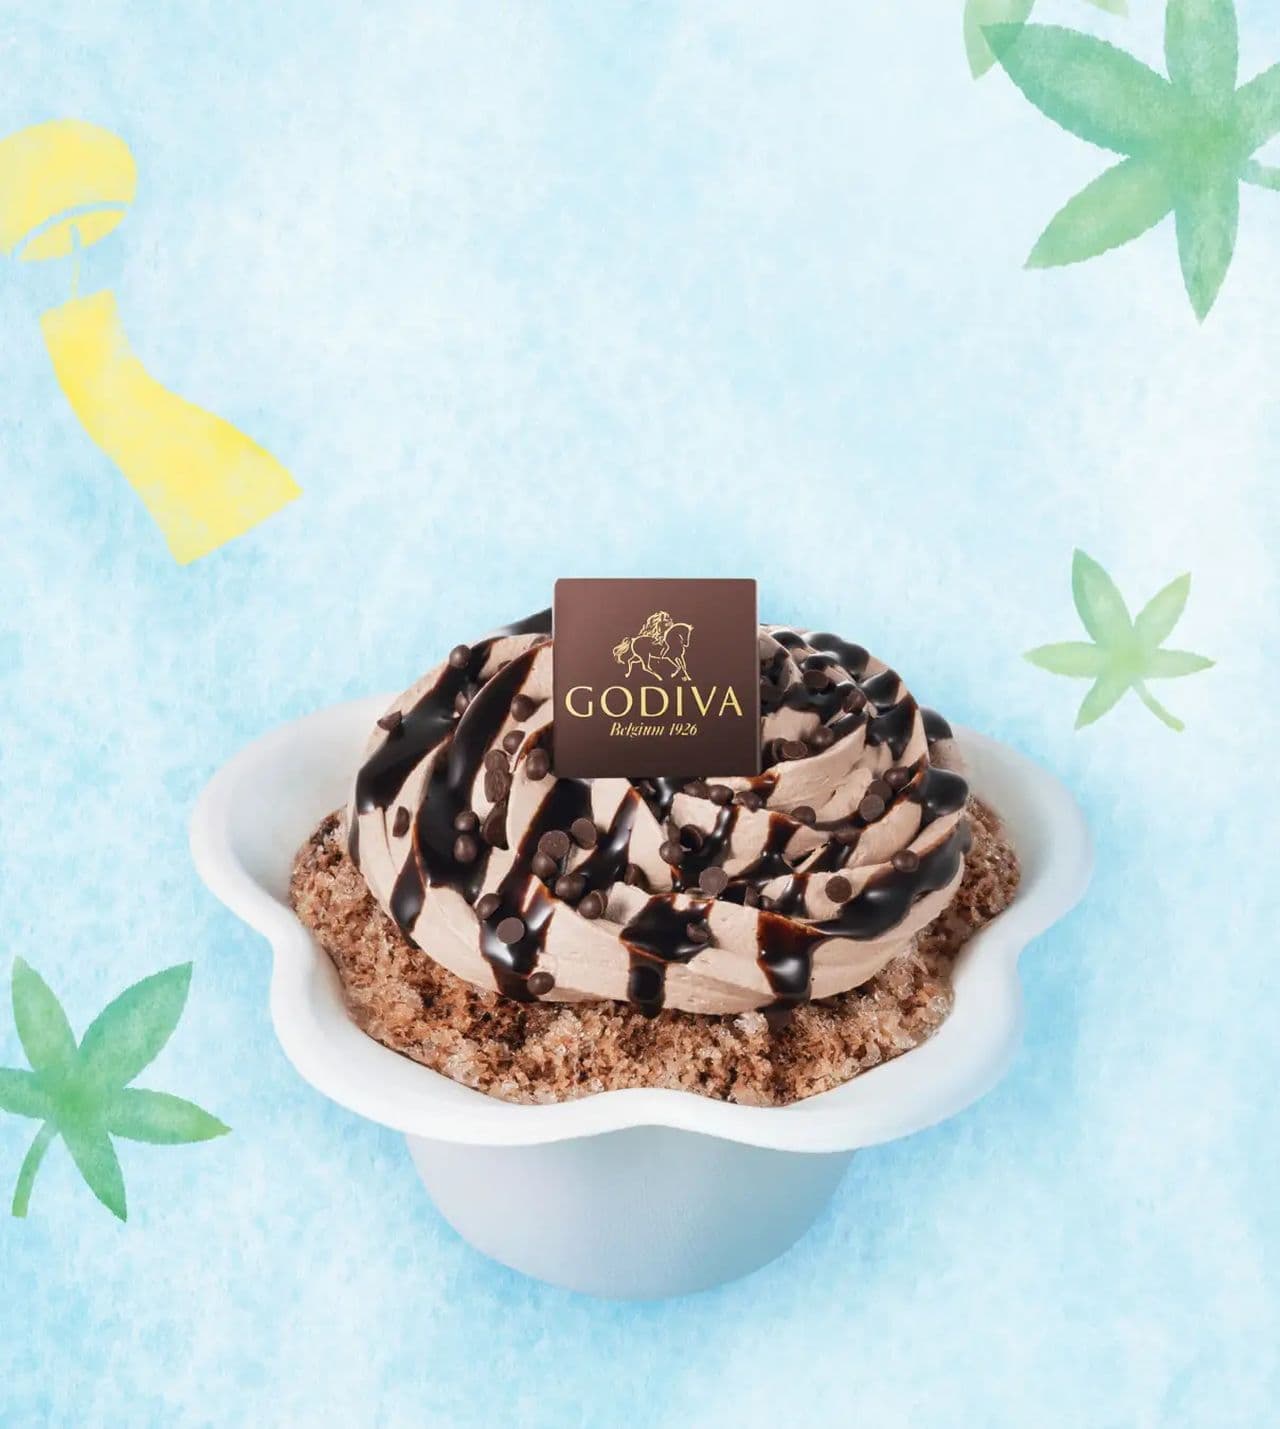 Godiva's chocolate shaved ice